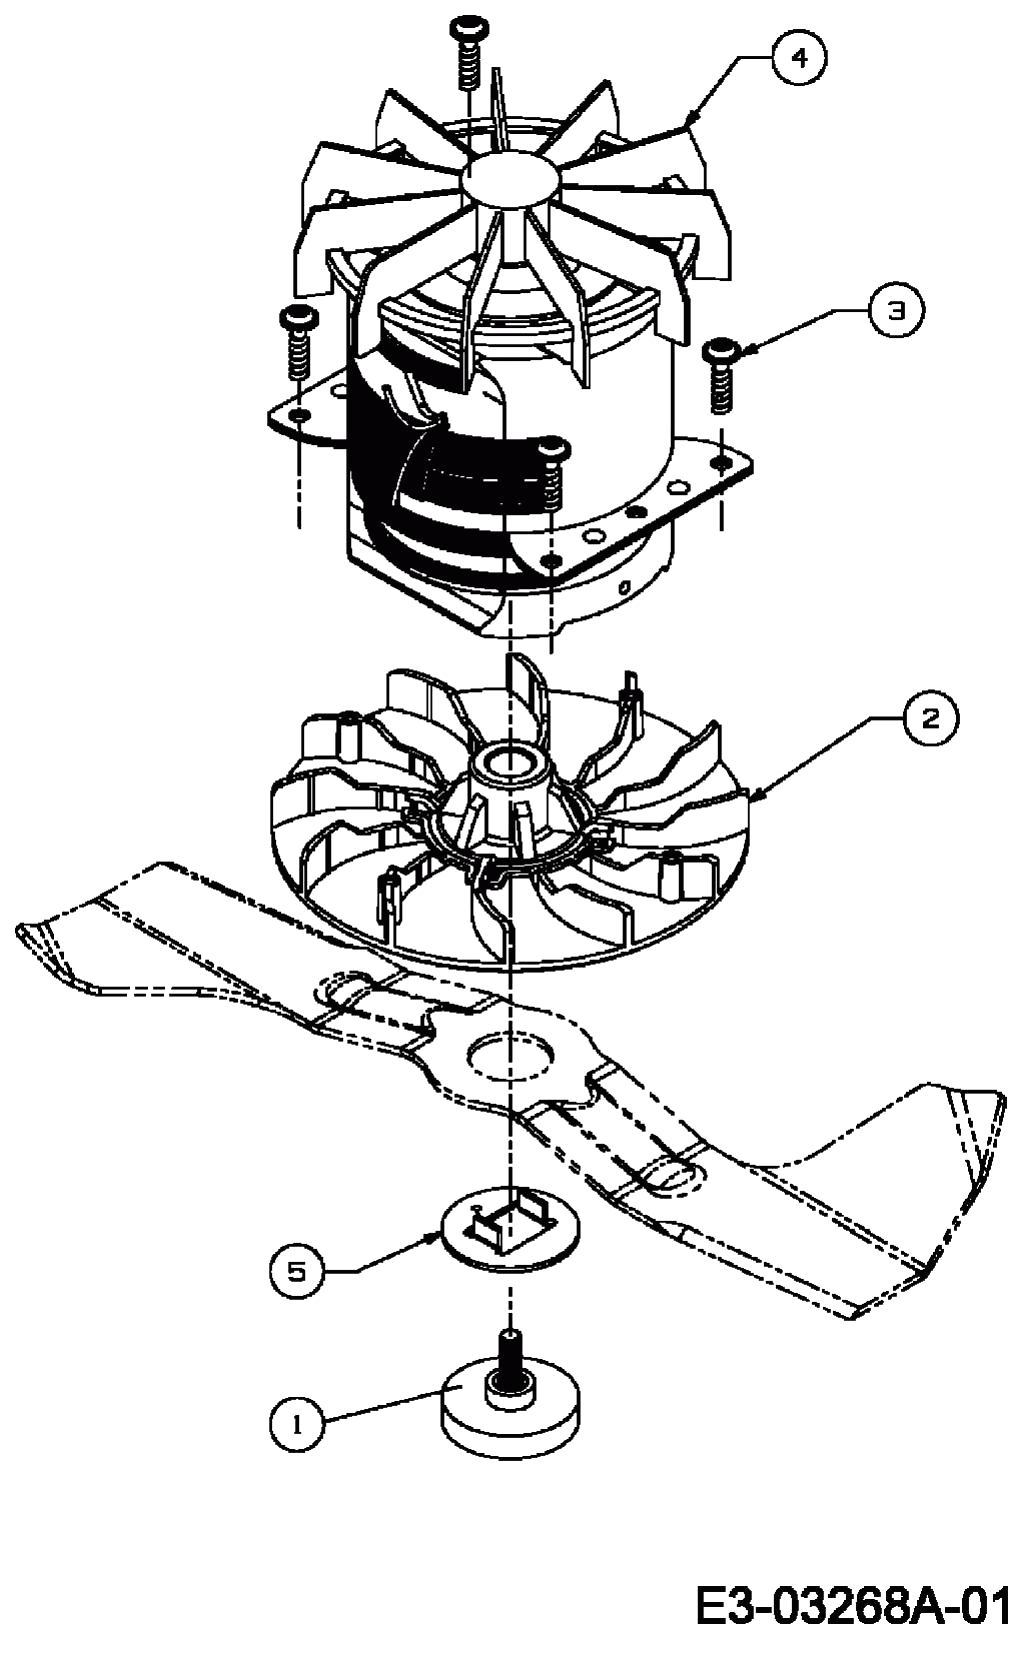 MTD Артикул 18C-N4S-678 (год выпуска 2007). Электродвигатель, нож